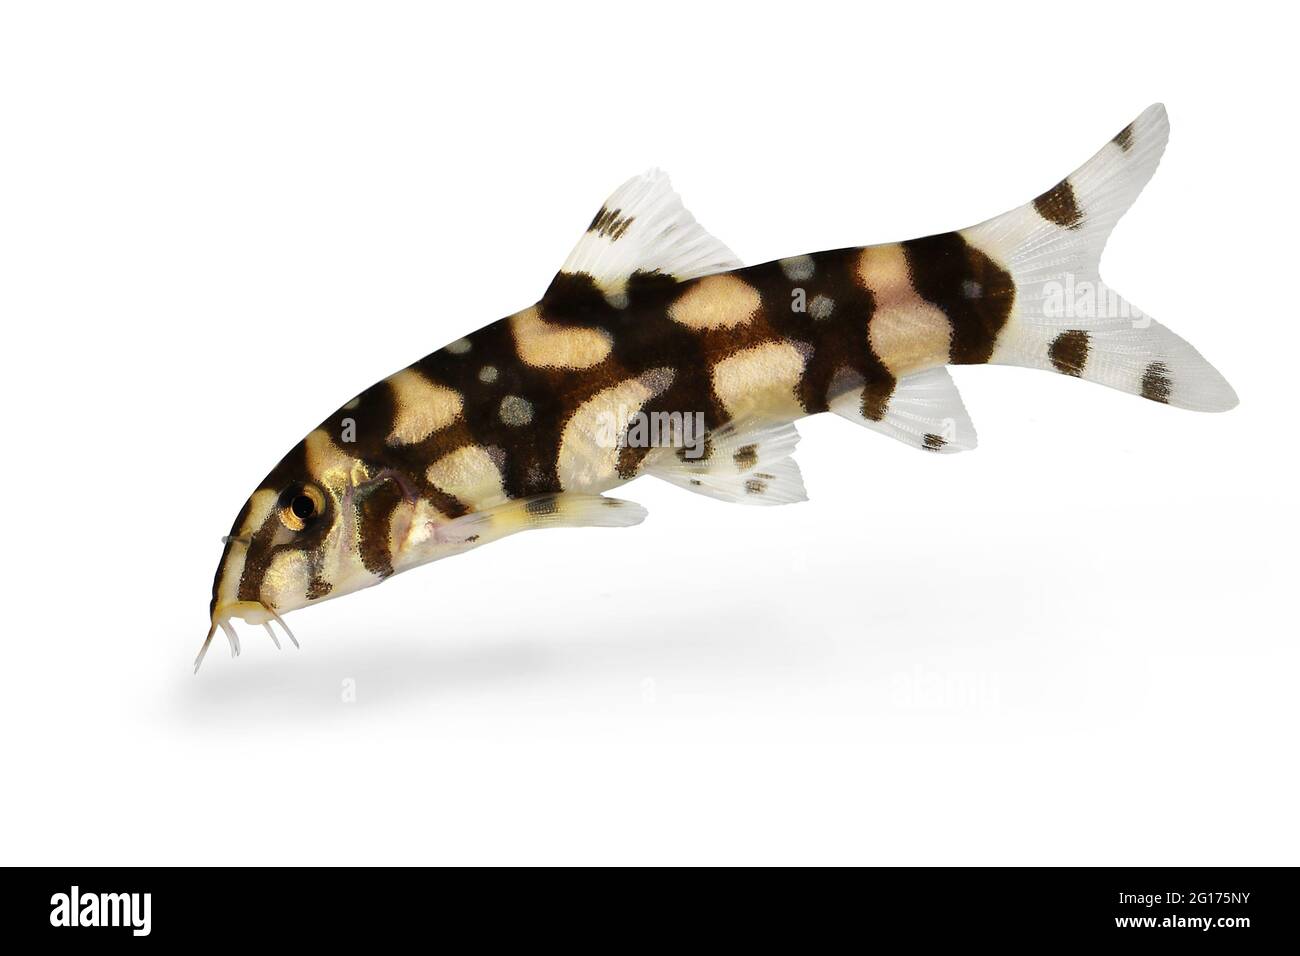 https://c8.alamy.com/comp/2G175NY/burmese-border-loach-catfish-polka-dot-loach-botia-kubotai-aquarium-fish-2G175NY.jpg